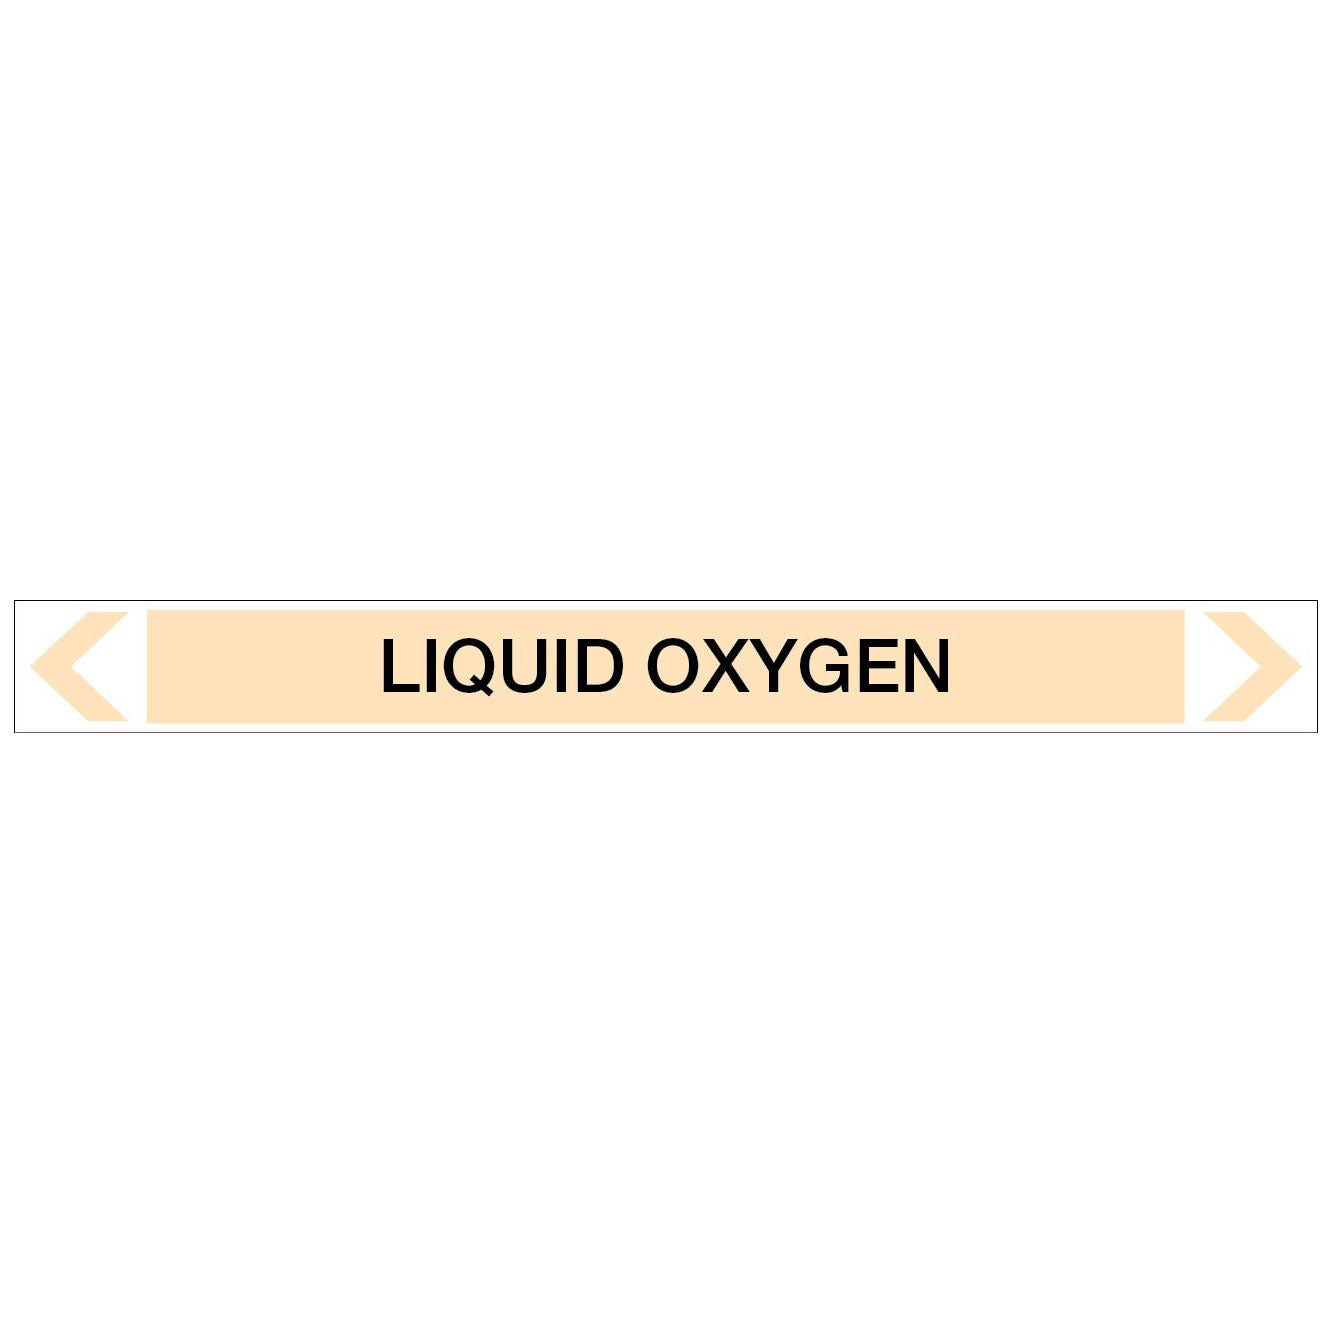 Gases - Liquid Oxygen - Pipe Marker Sticker